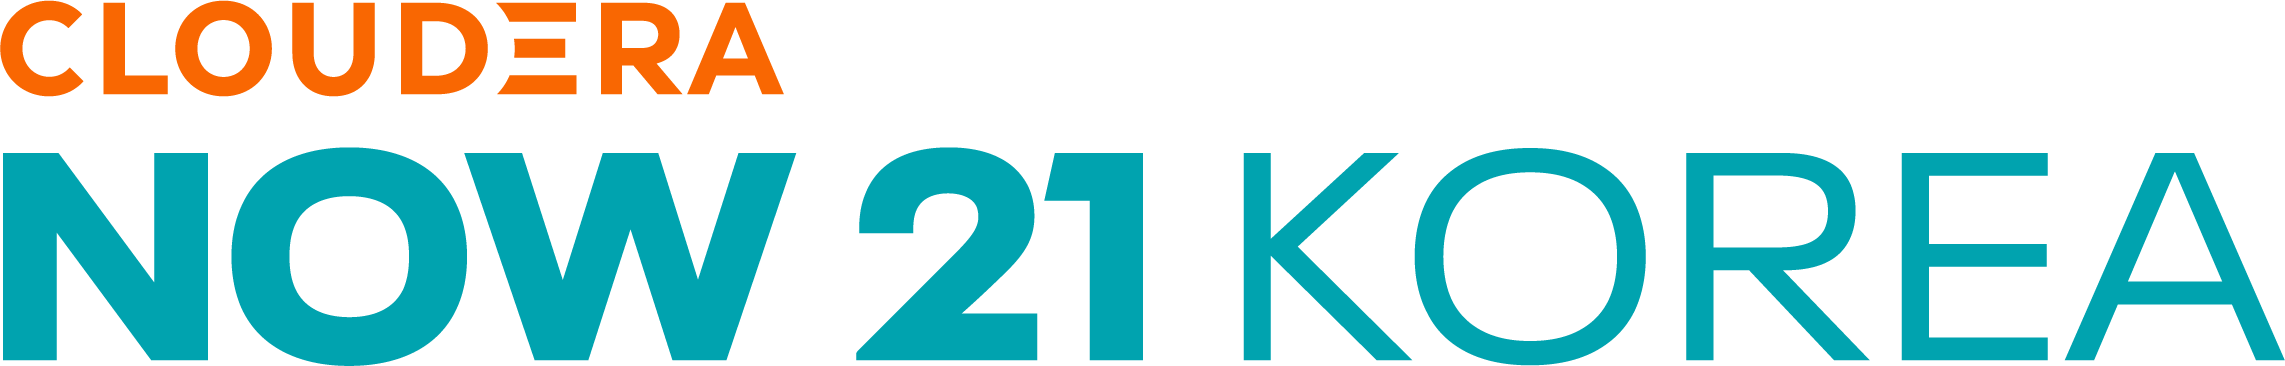 Cloudera Now Korea 21 logo